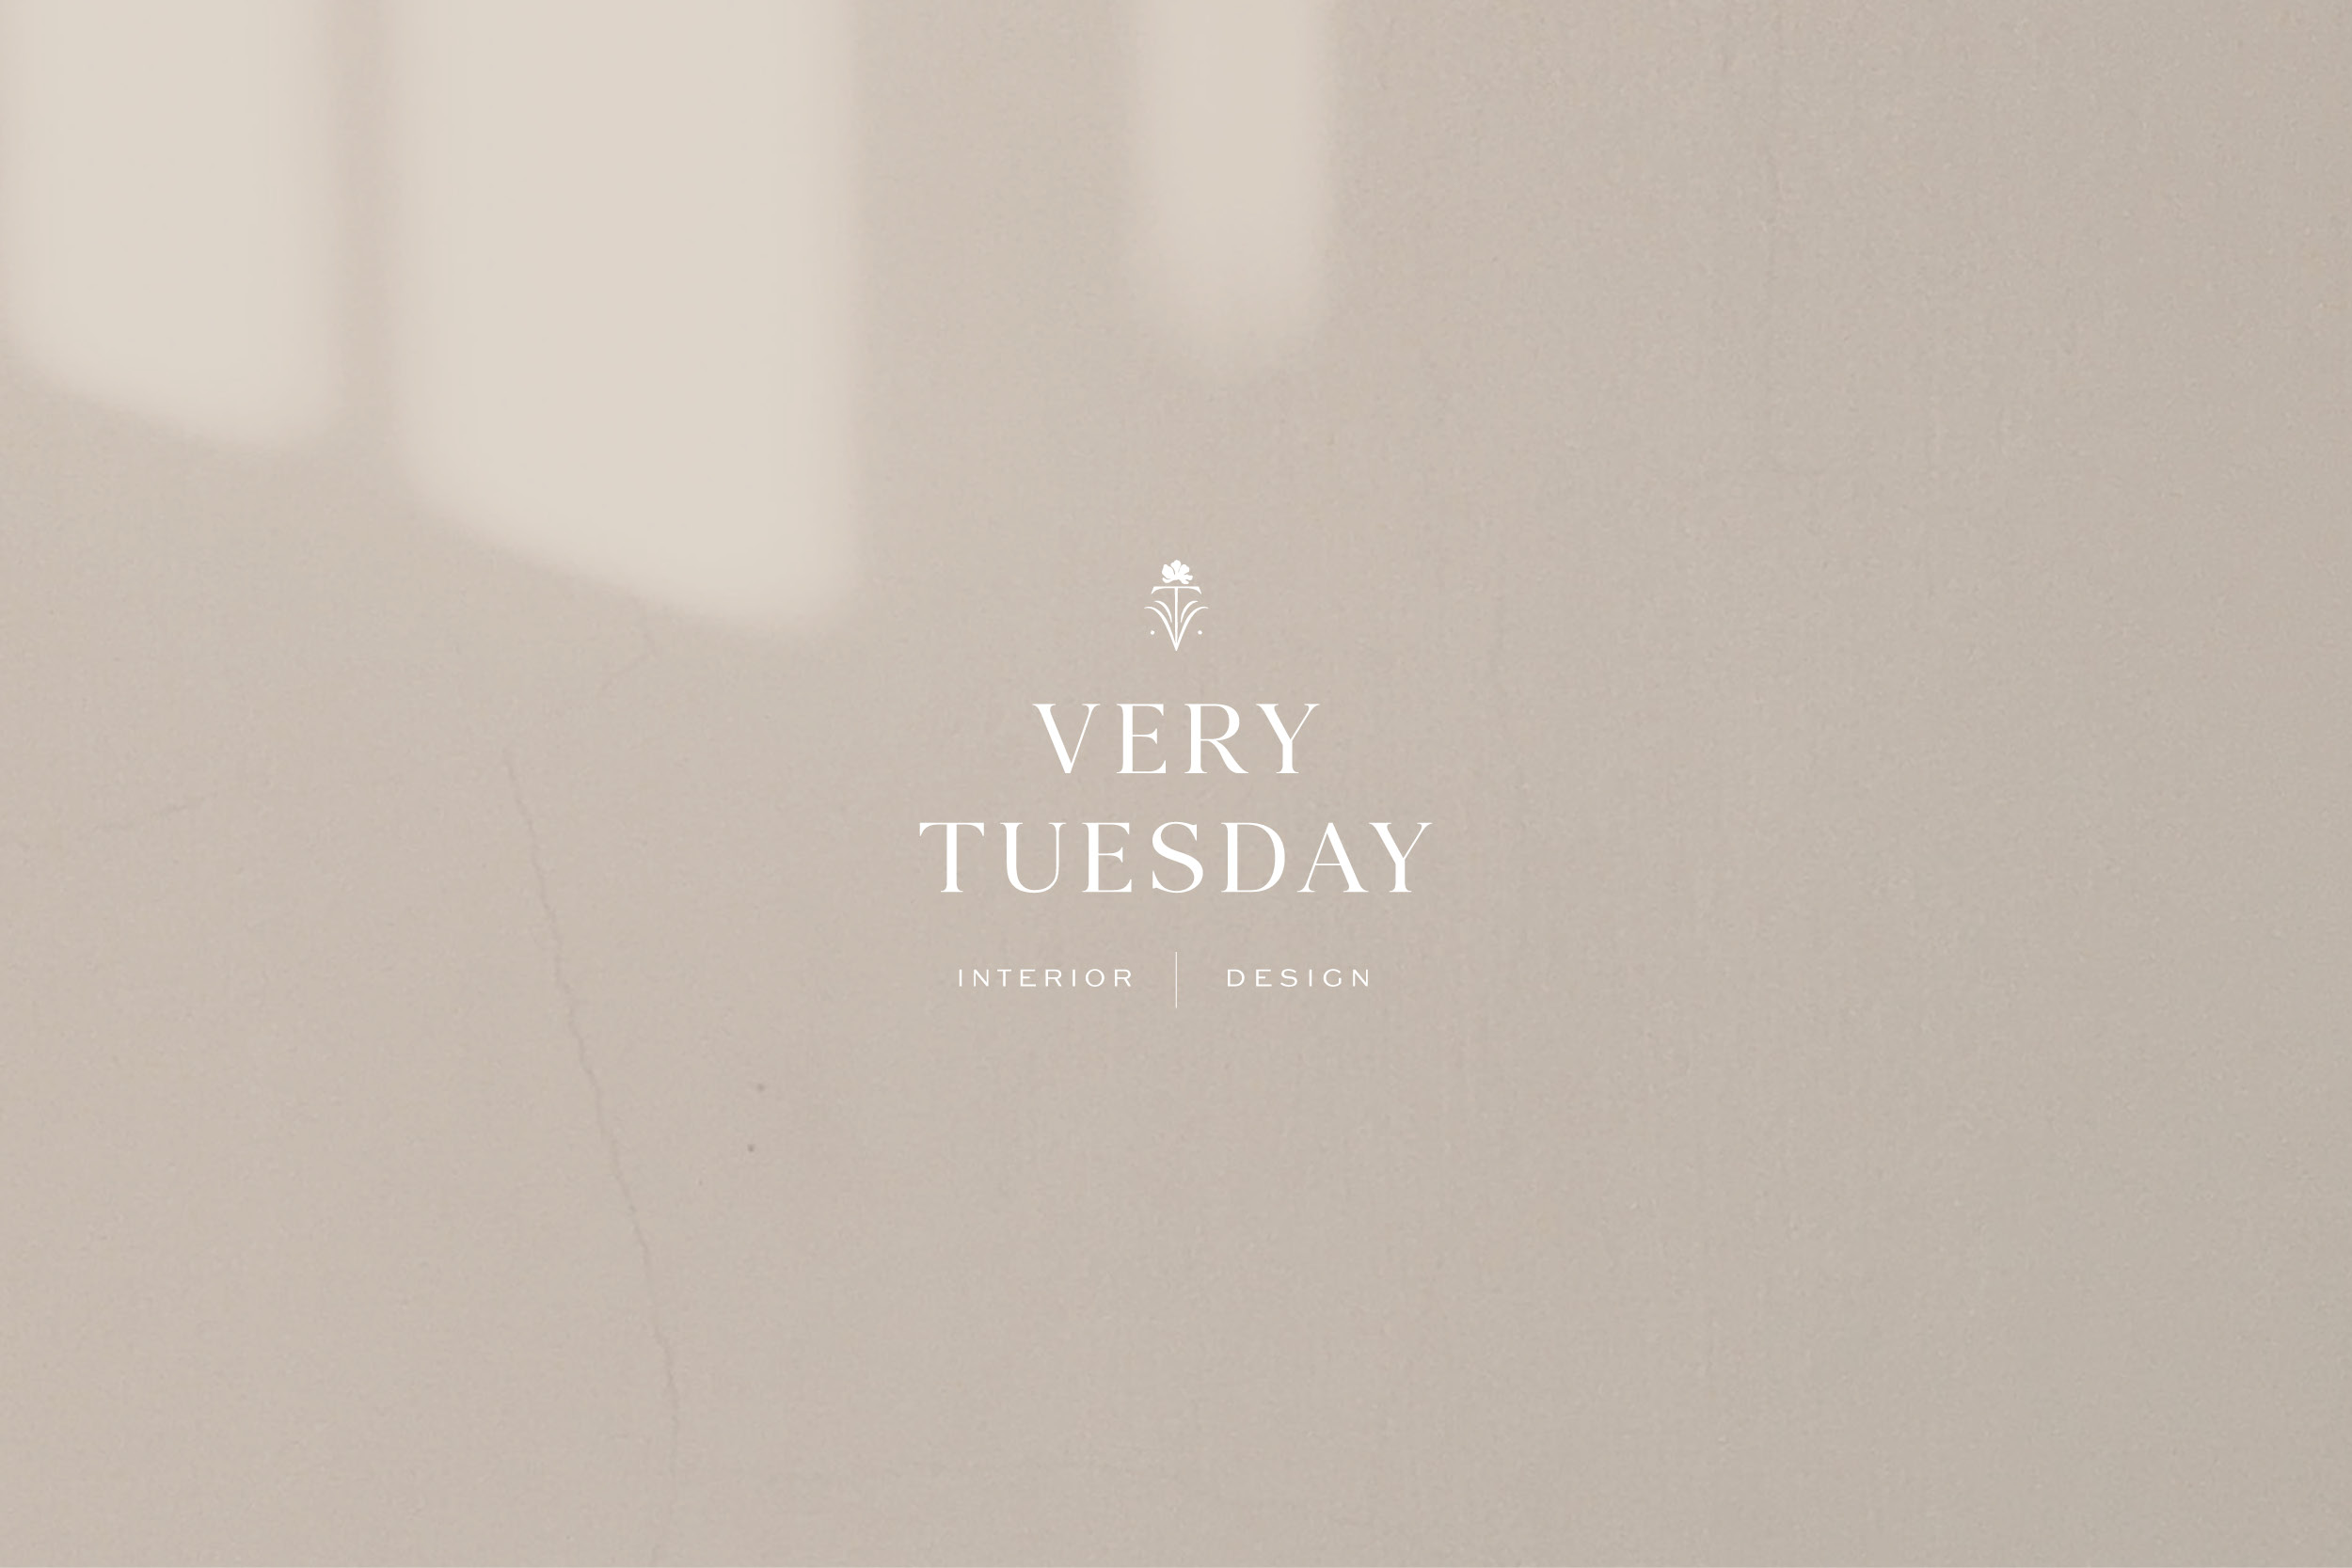 Very Tuesday - Interior Design Studio Logo + Branding by Sarah Ann Design - 1